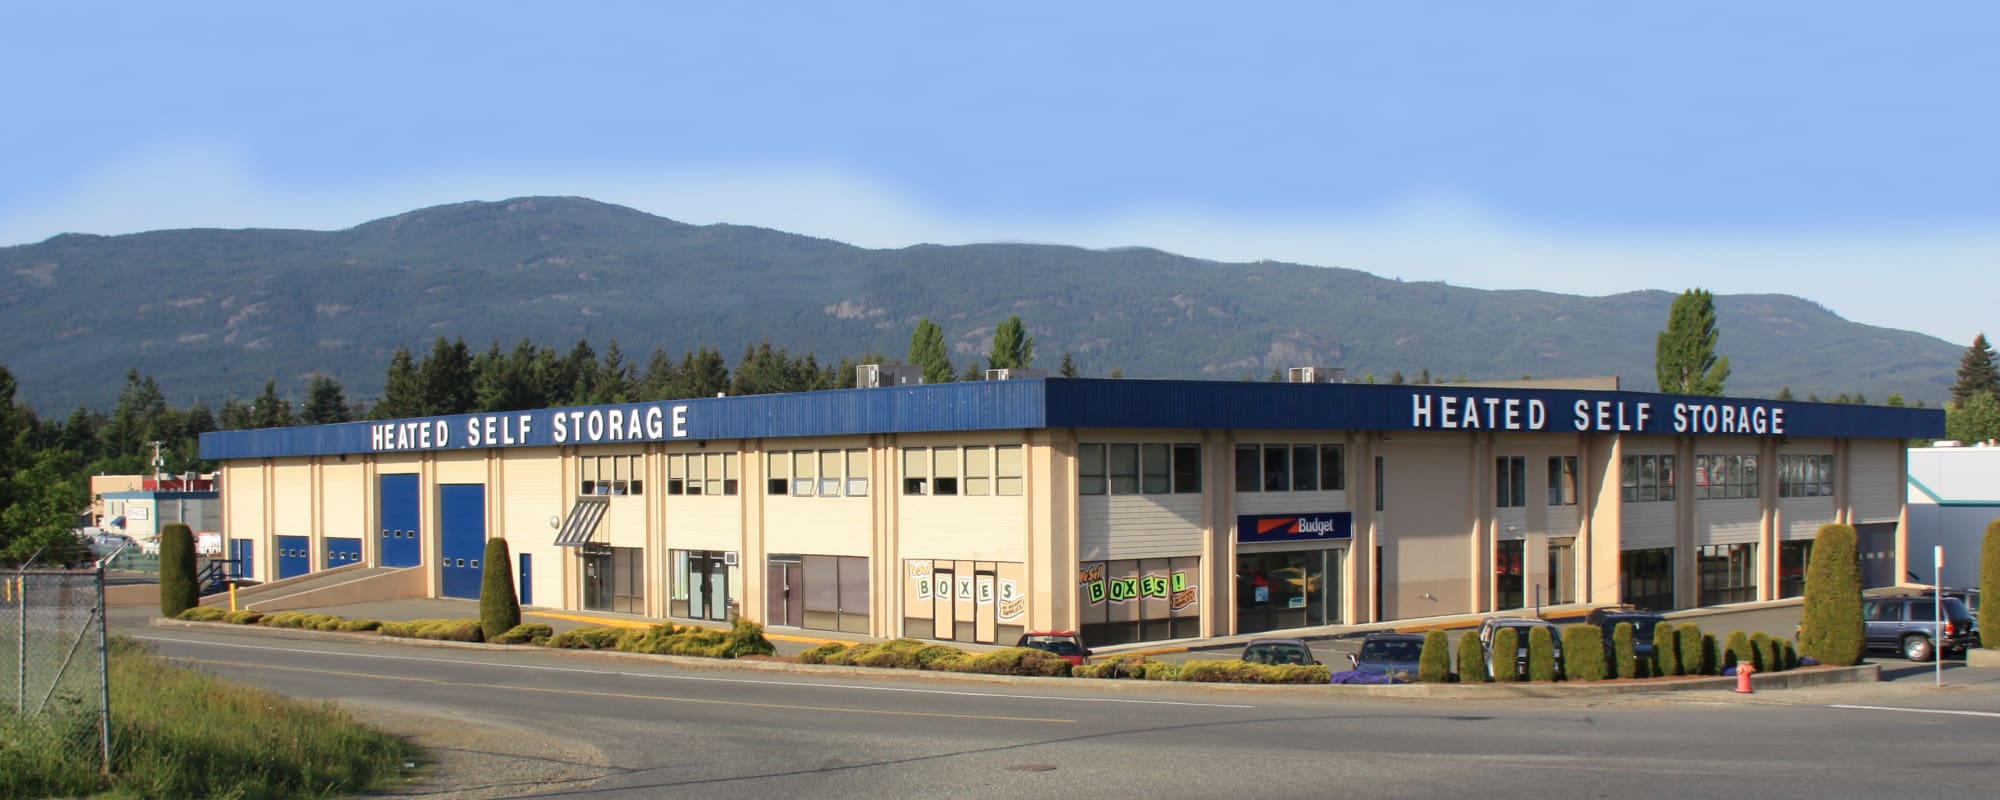 Budget Self Storage in Nanaimo, British Columbia